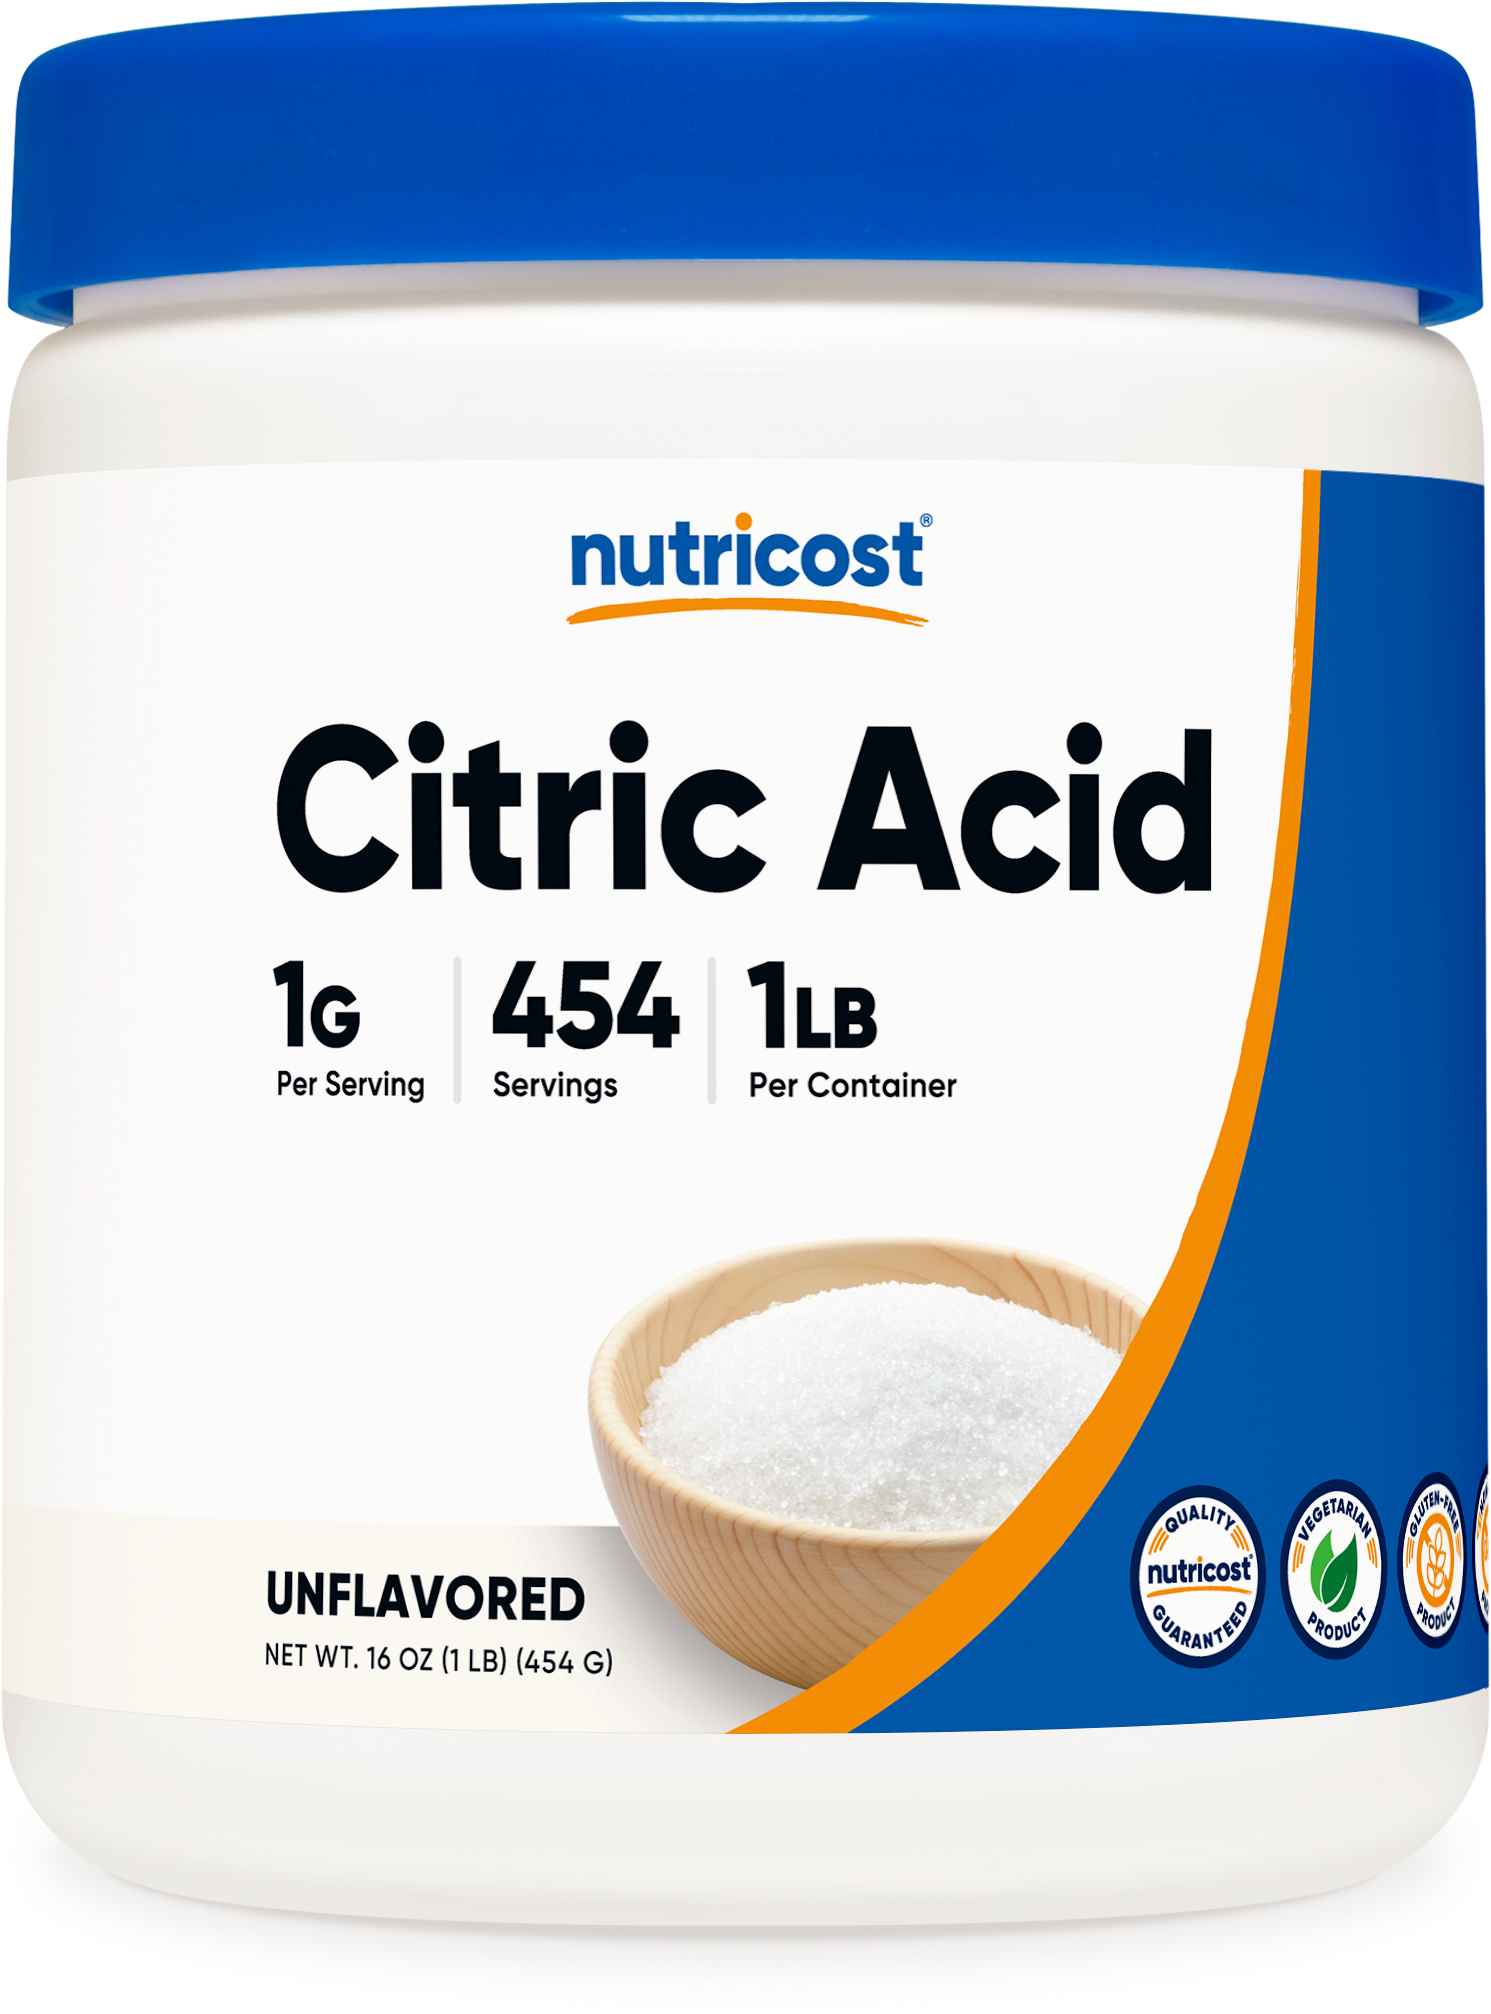 nutricost citric acid 1 pound bottle